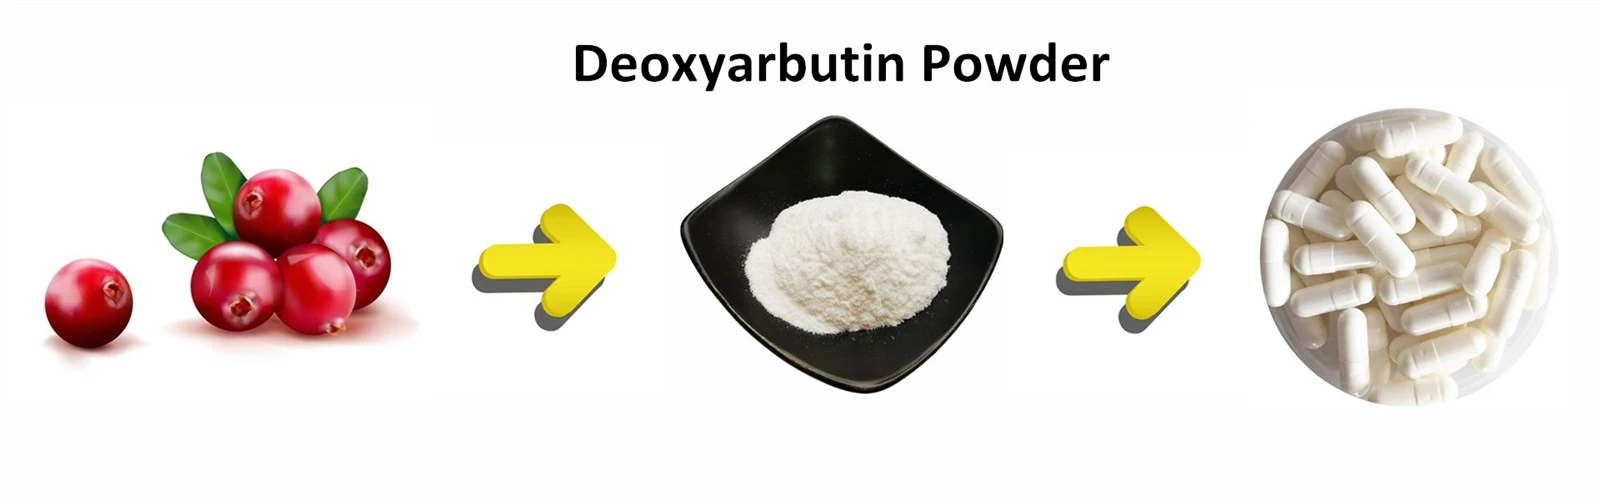 Deoxyarbutin Powder